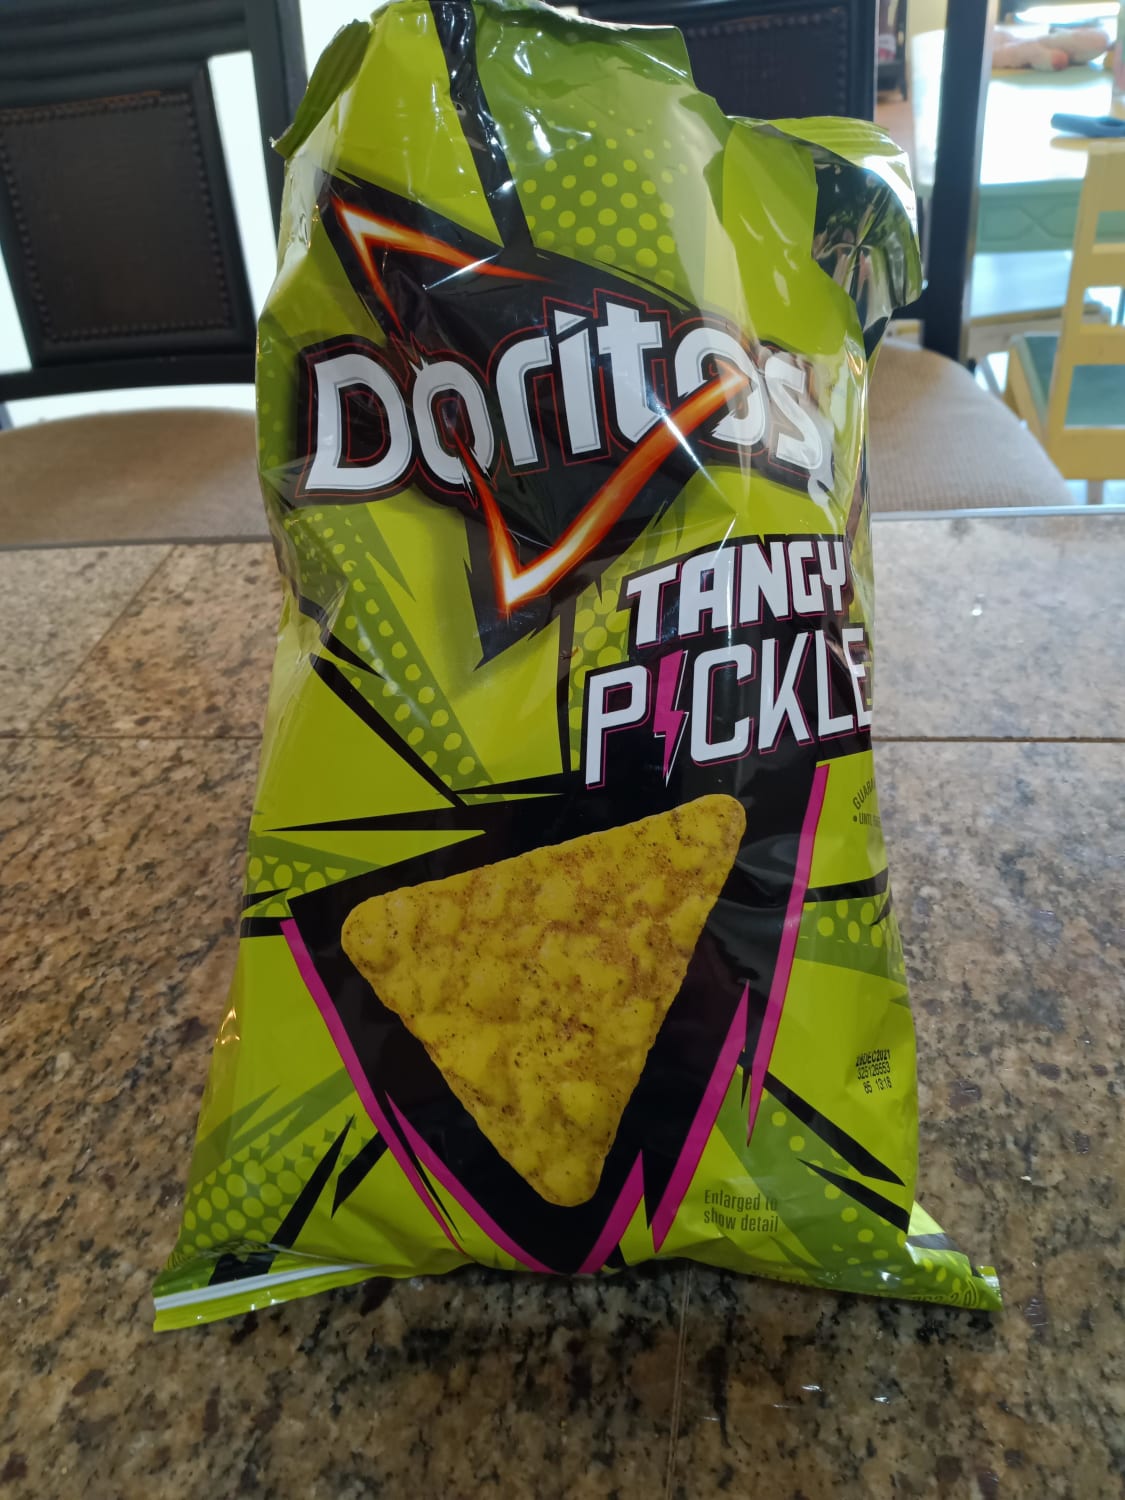 New vegan Doritos flavor.